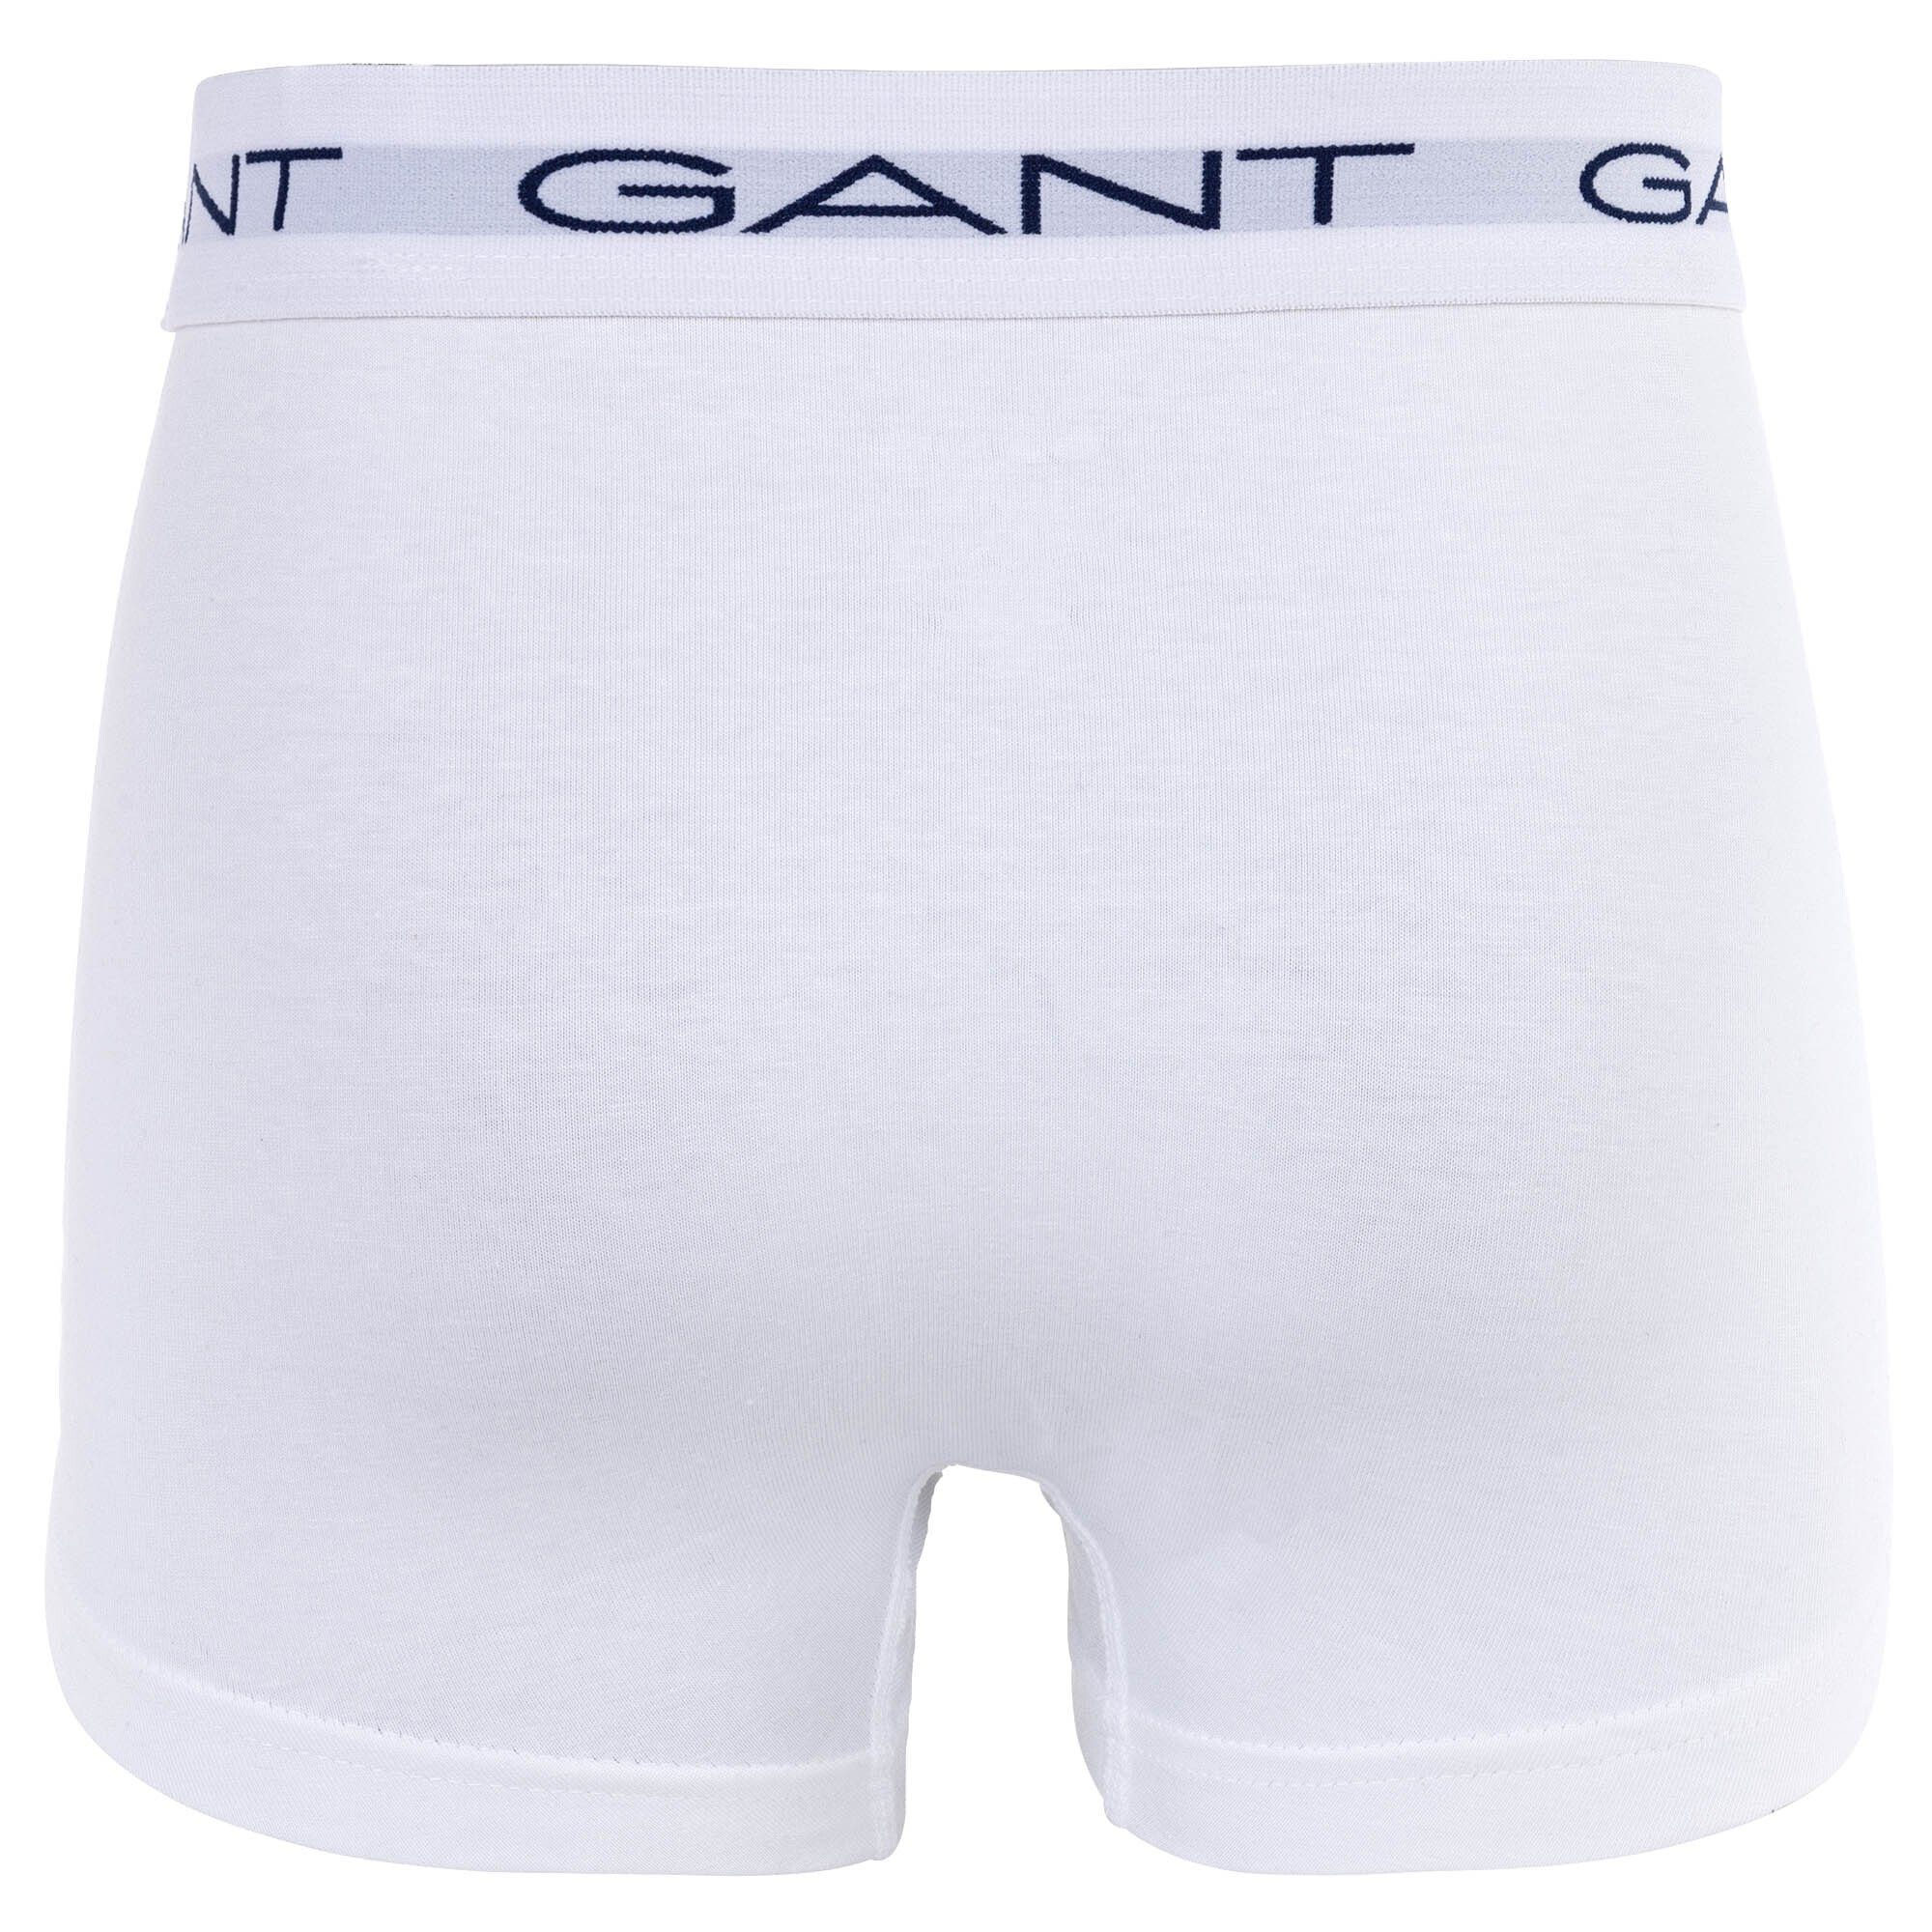 Shorts, Trunks, 3er Cotton Gant Mehrfarbig - Boxer Boxer Jungen Pack